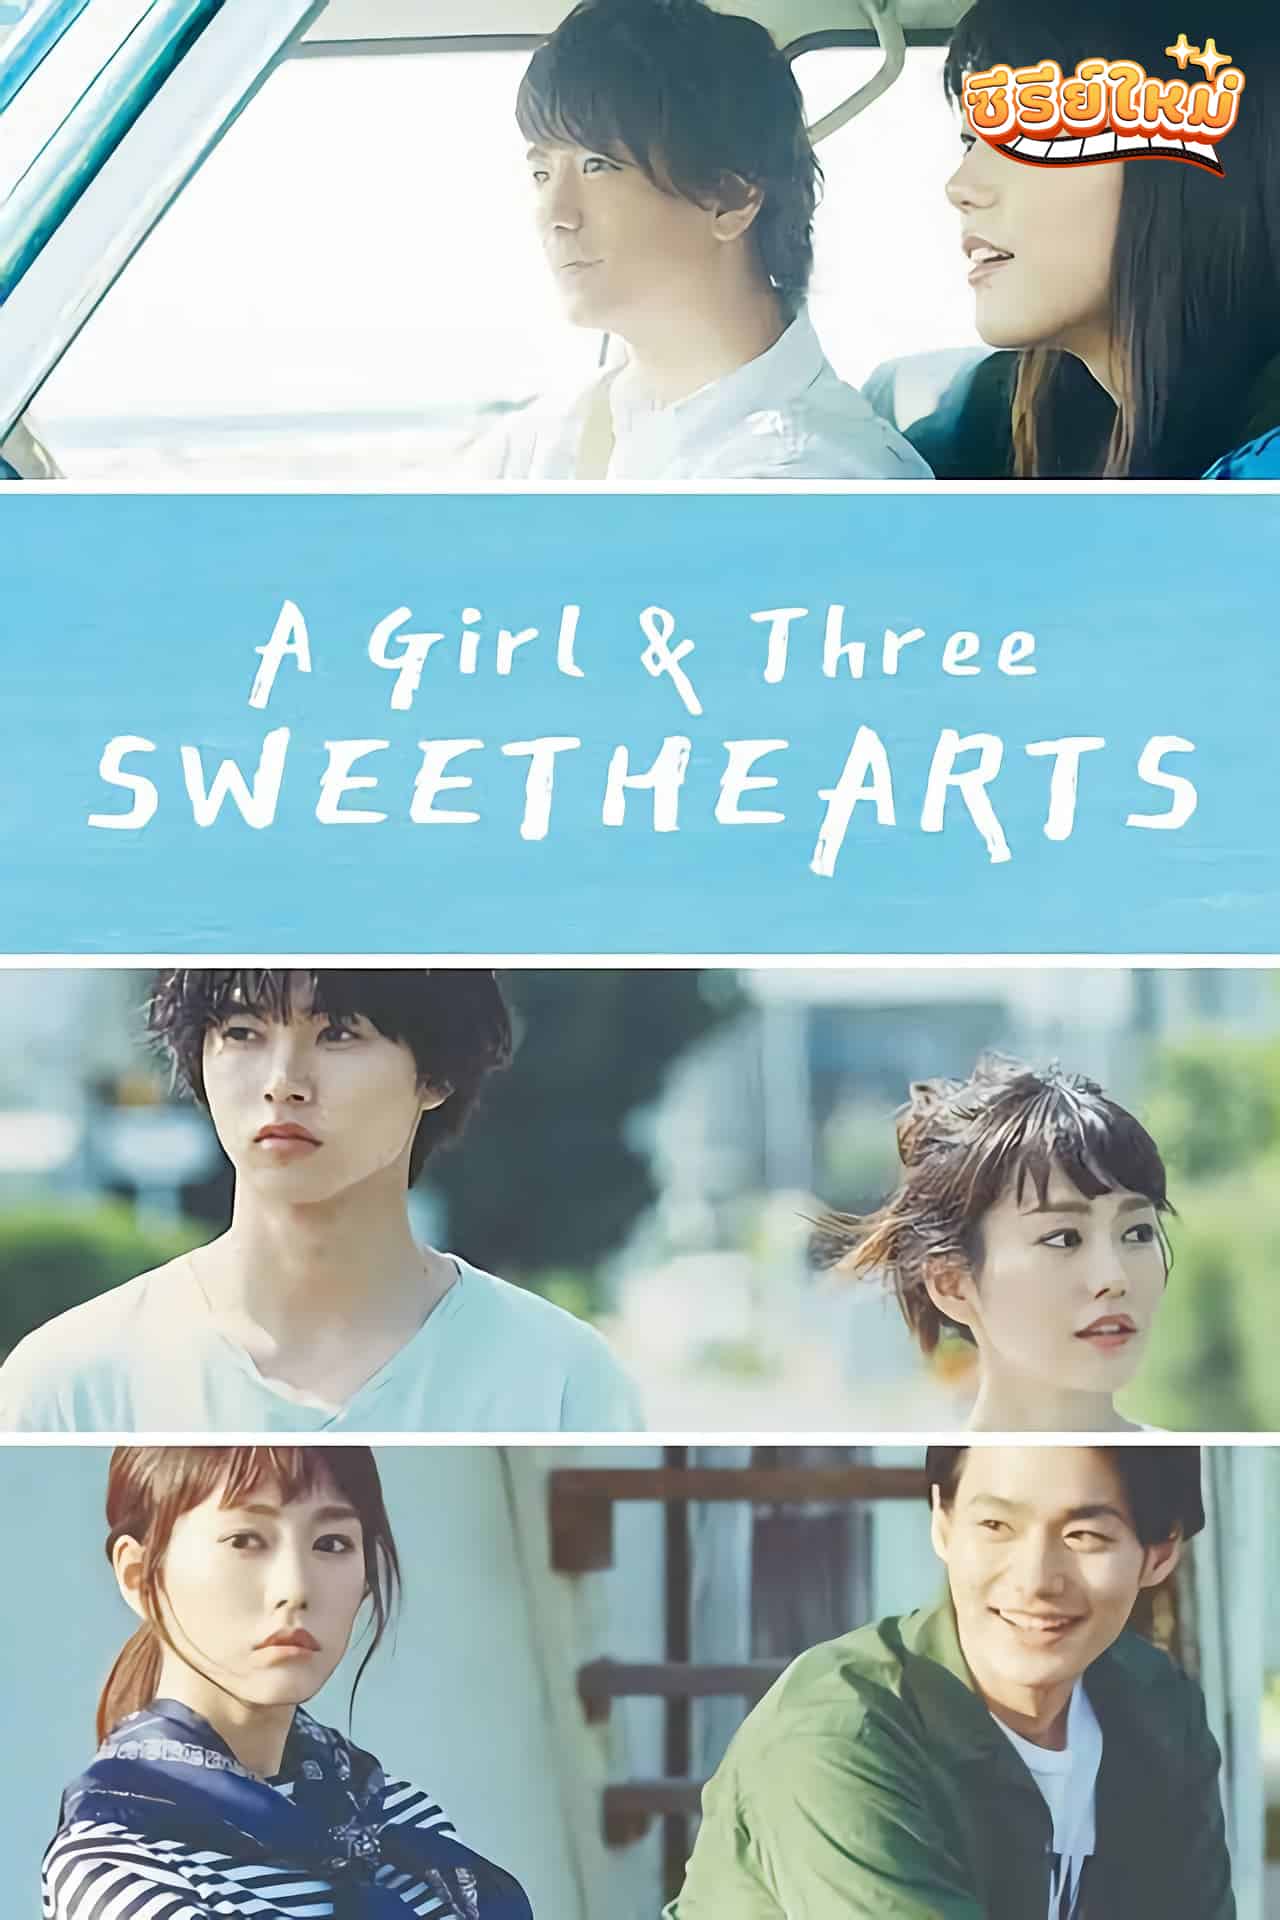 A Girl and Three Sweethearts ซัมเมอร์ ของหวาน และสามหนุ่ม (2016)